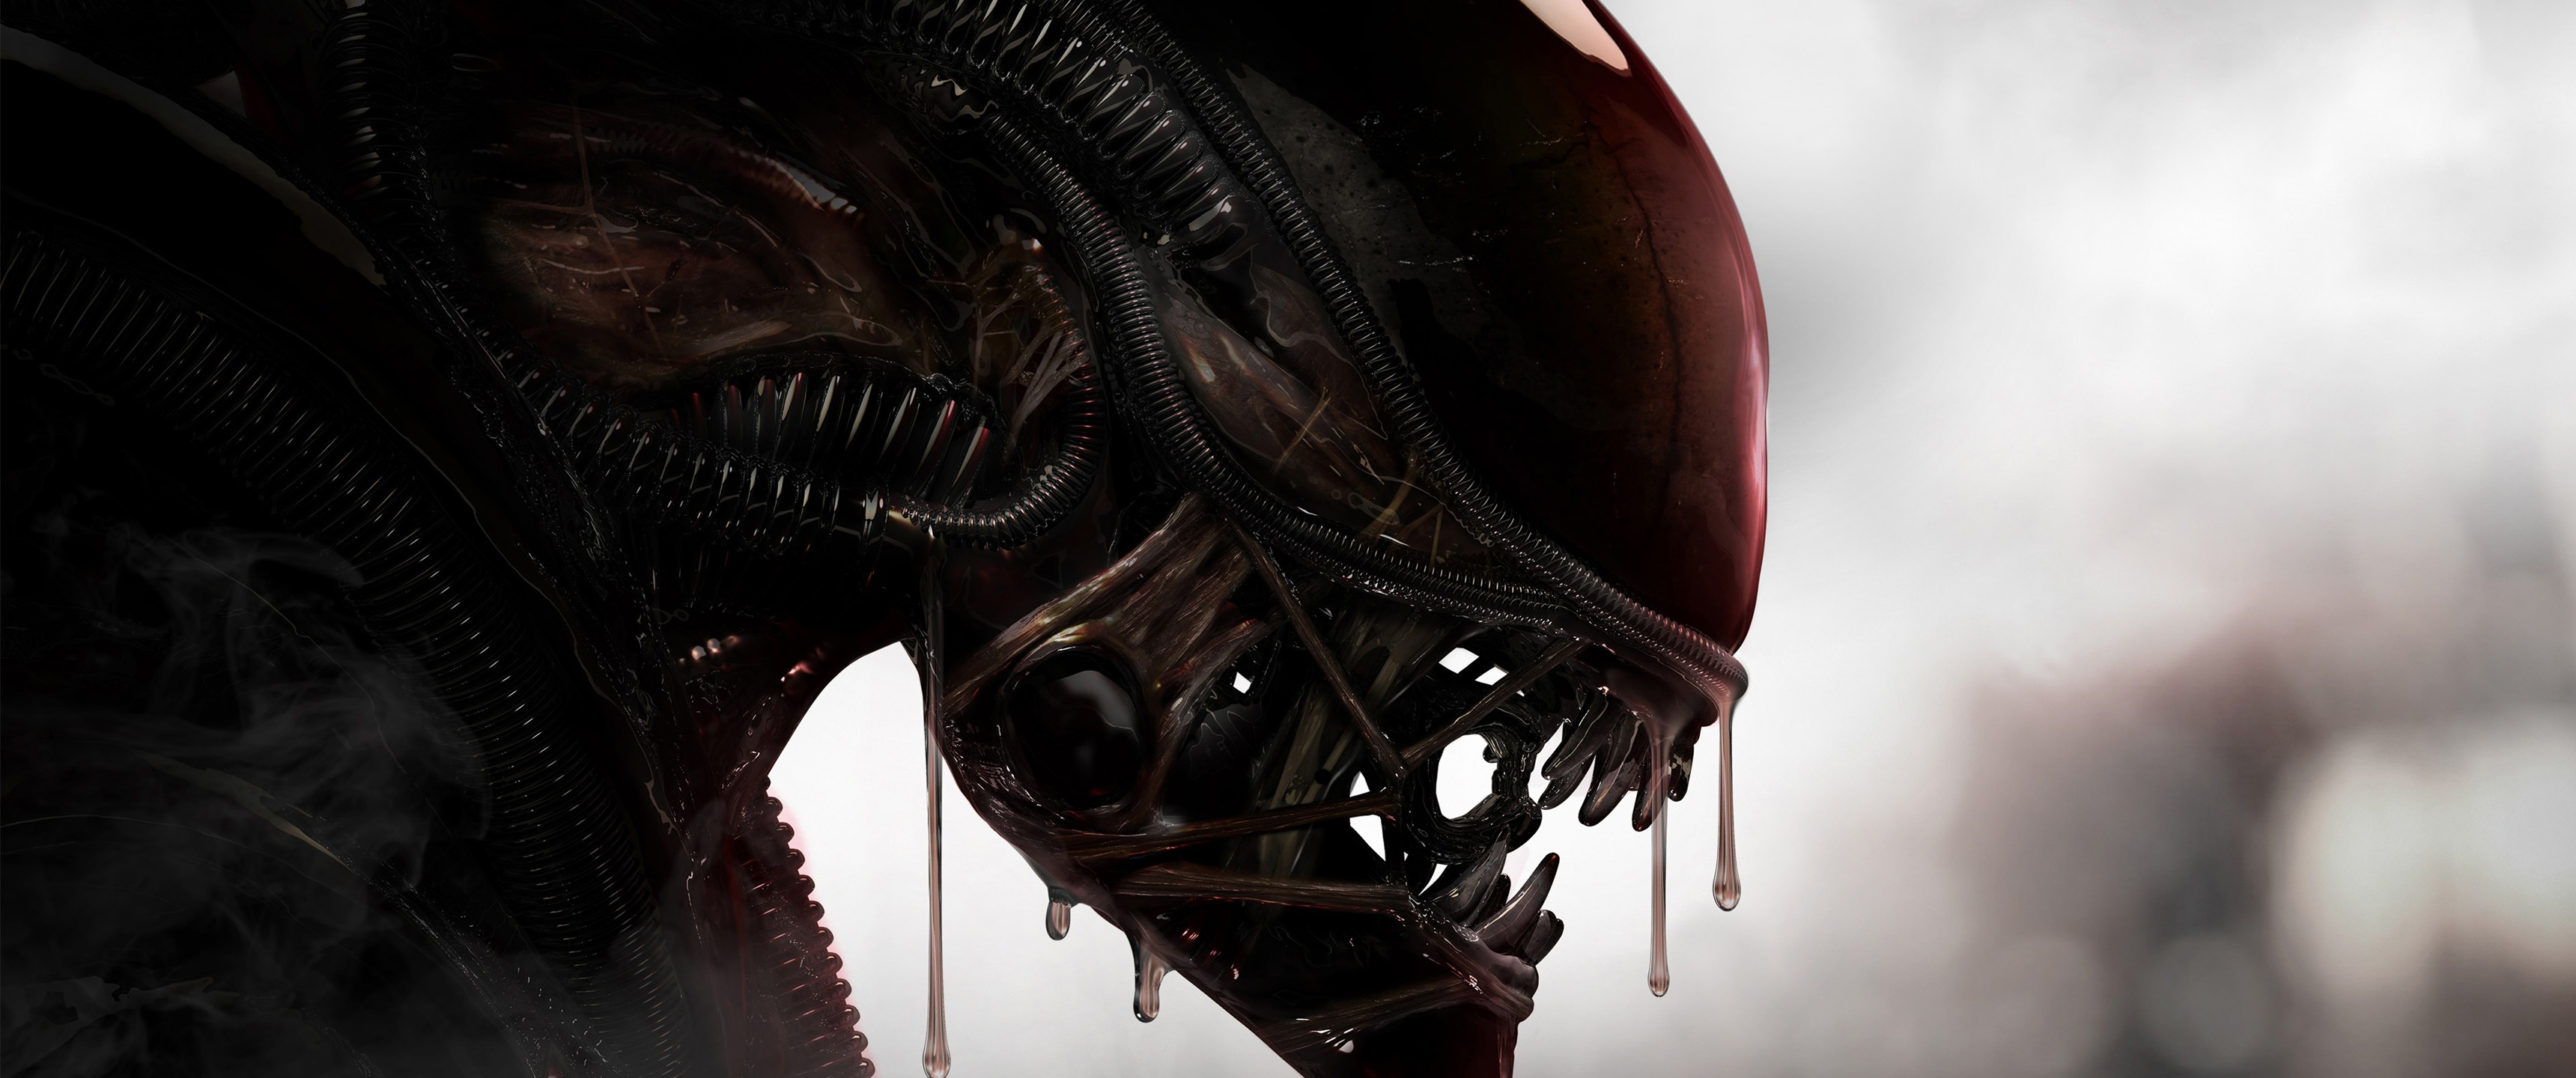 Alien (movie), Movies Wallpaper